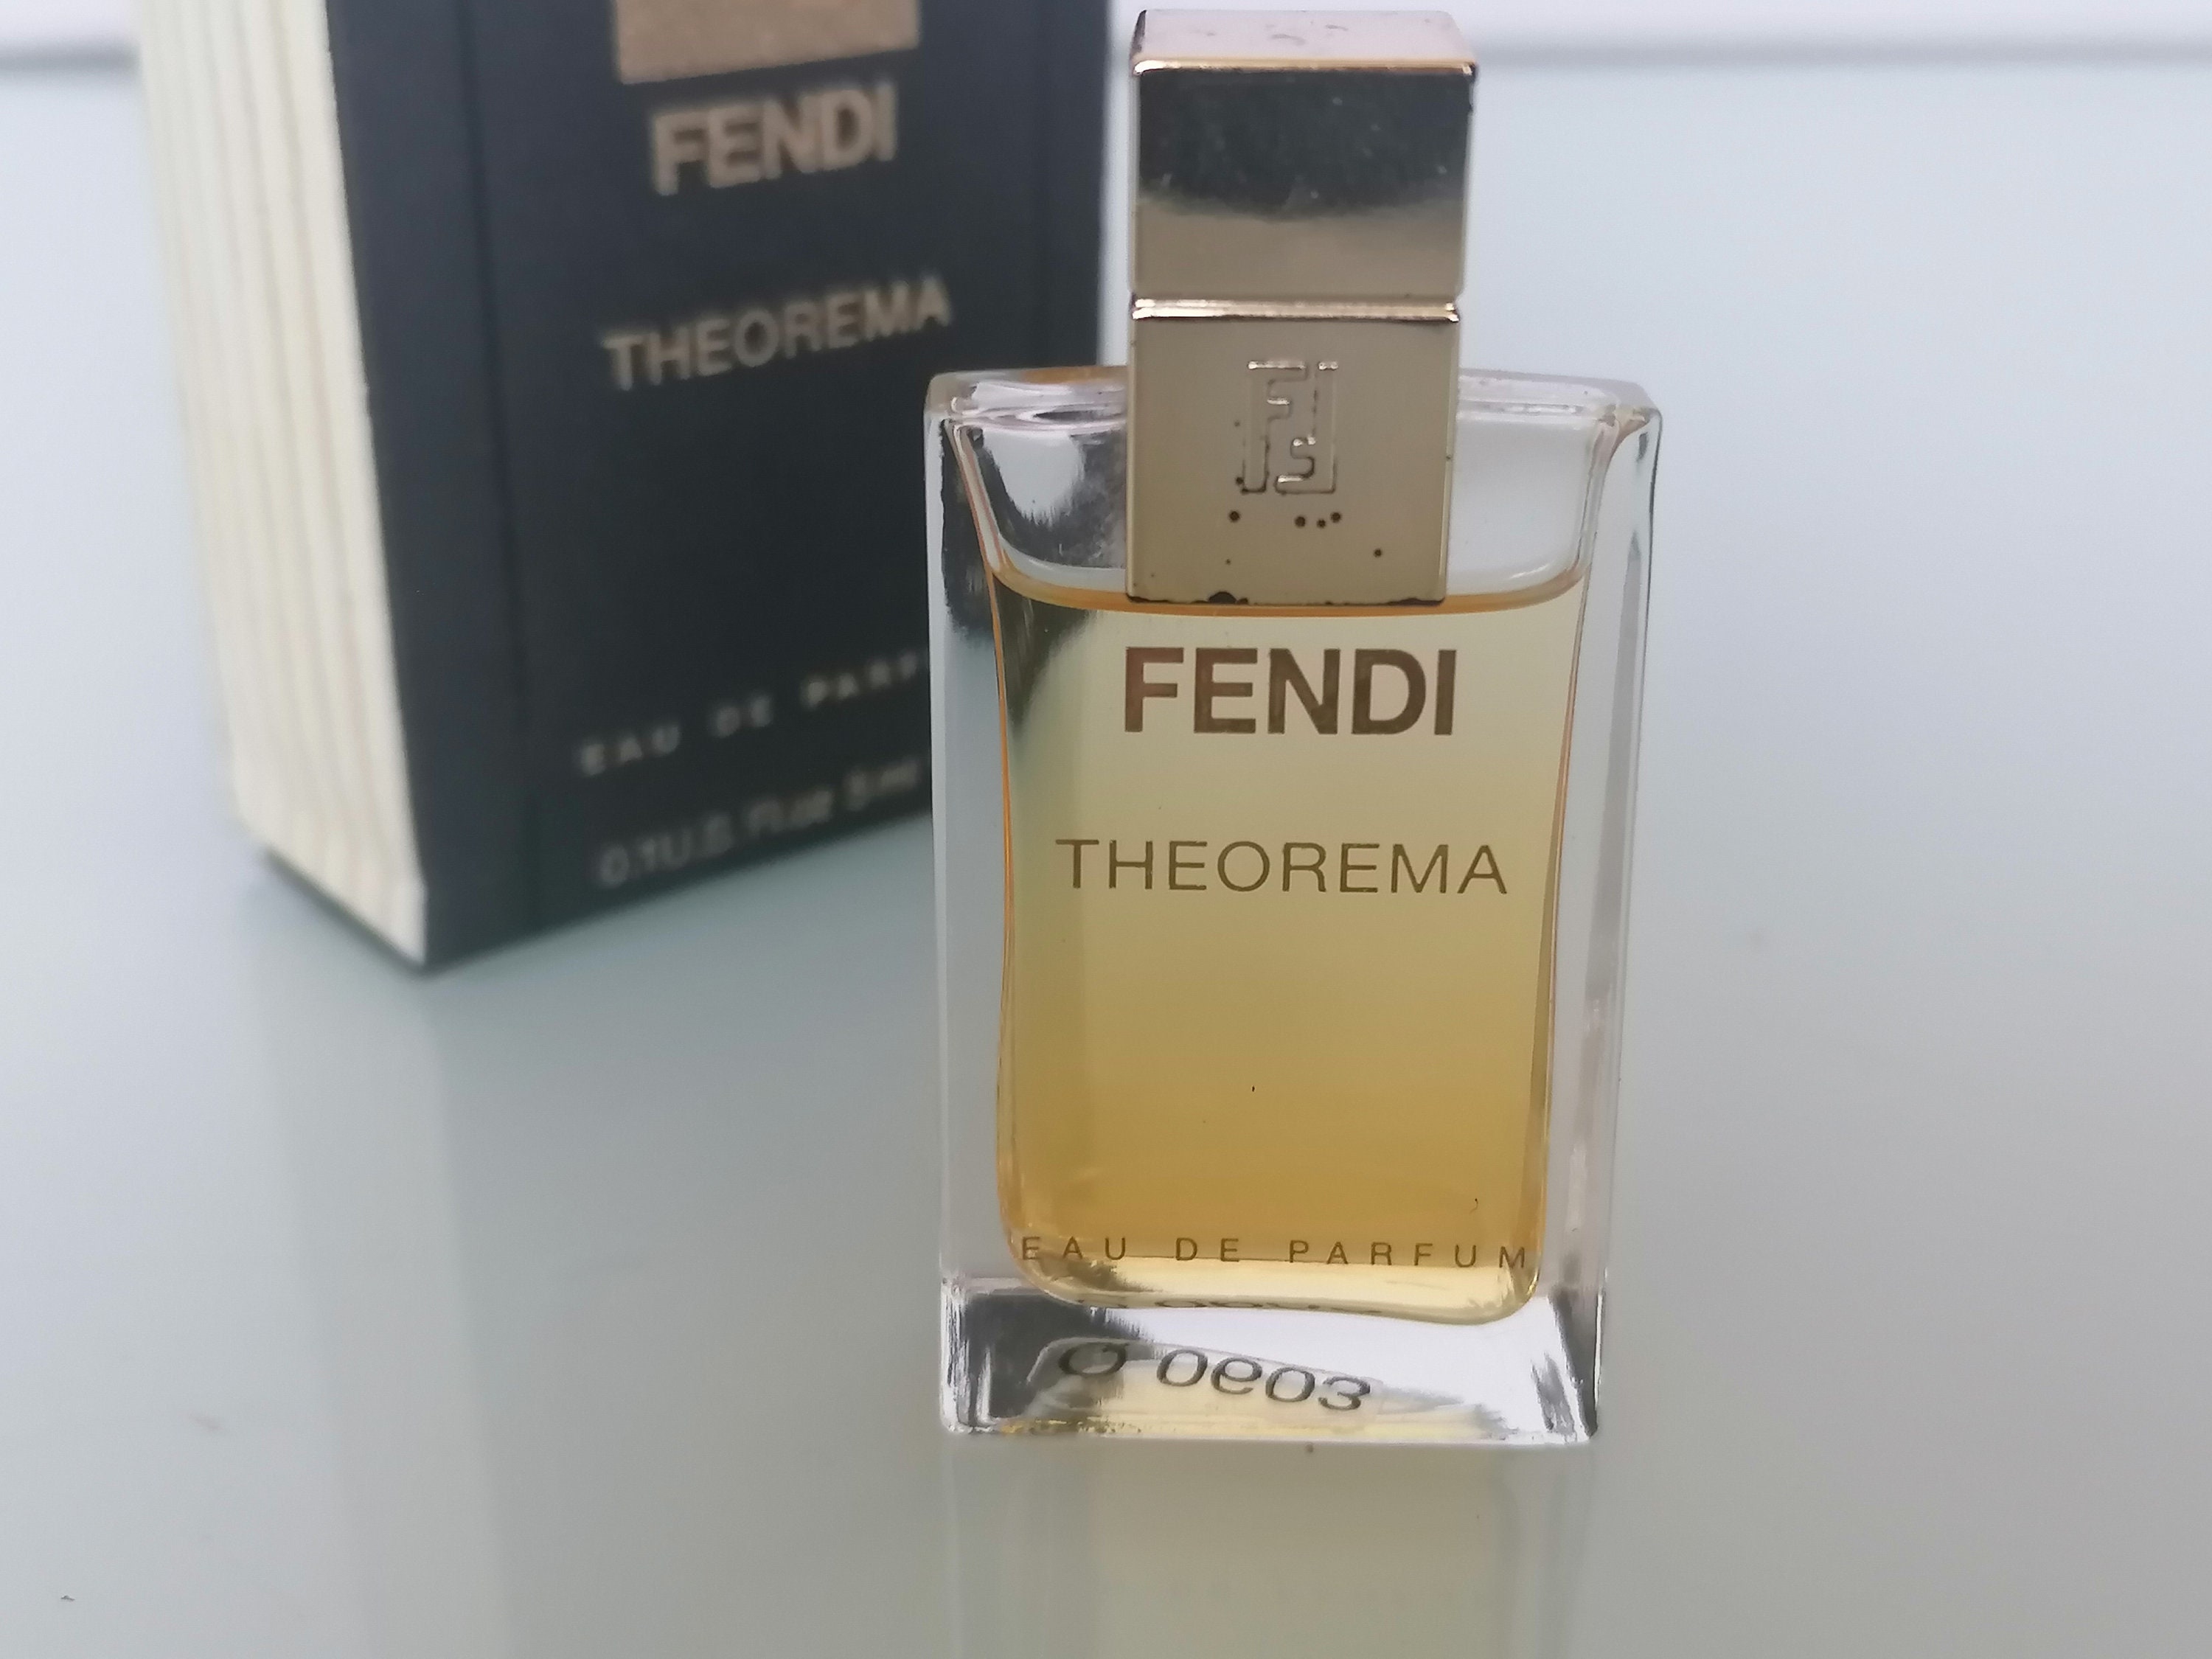 MINIATURE Perfume theorema Fendi 1998 Eau De Parfum - Etsy UK